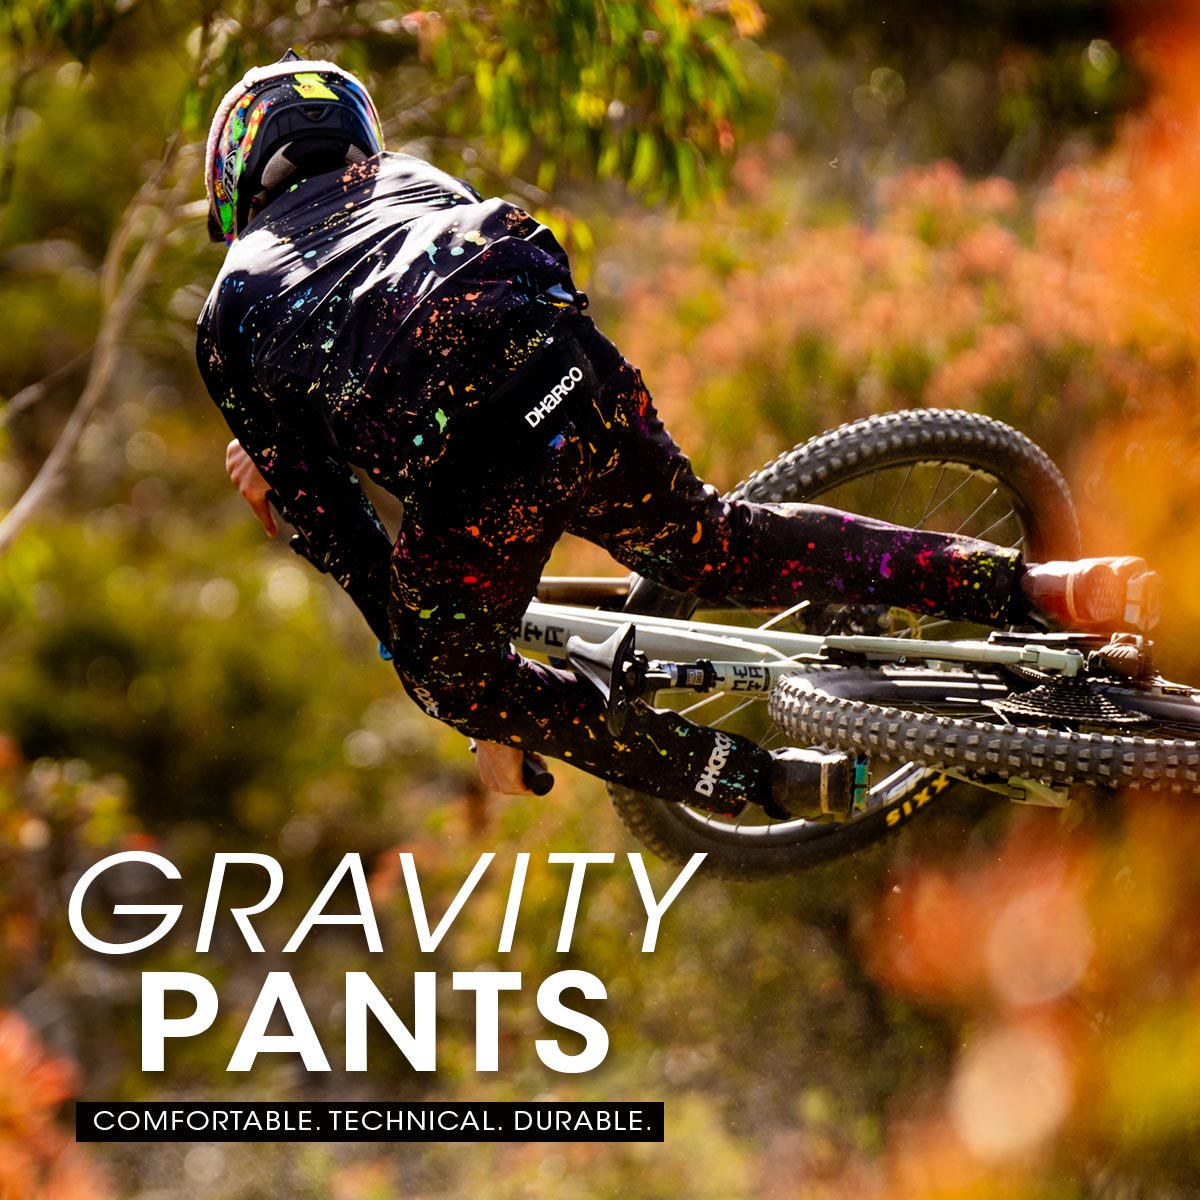 Mountain Bike Clothing - Jerseys, Shorts, Pants, Accessories